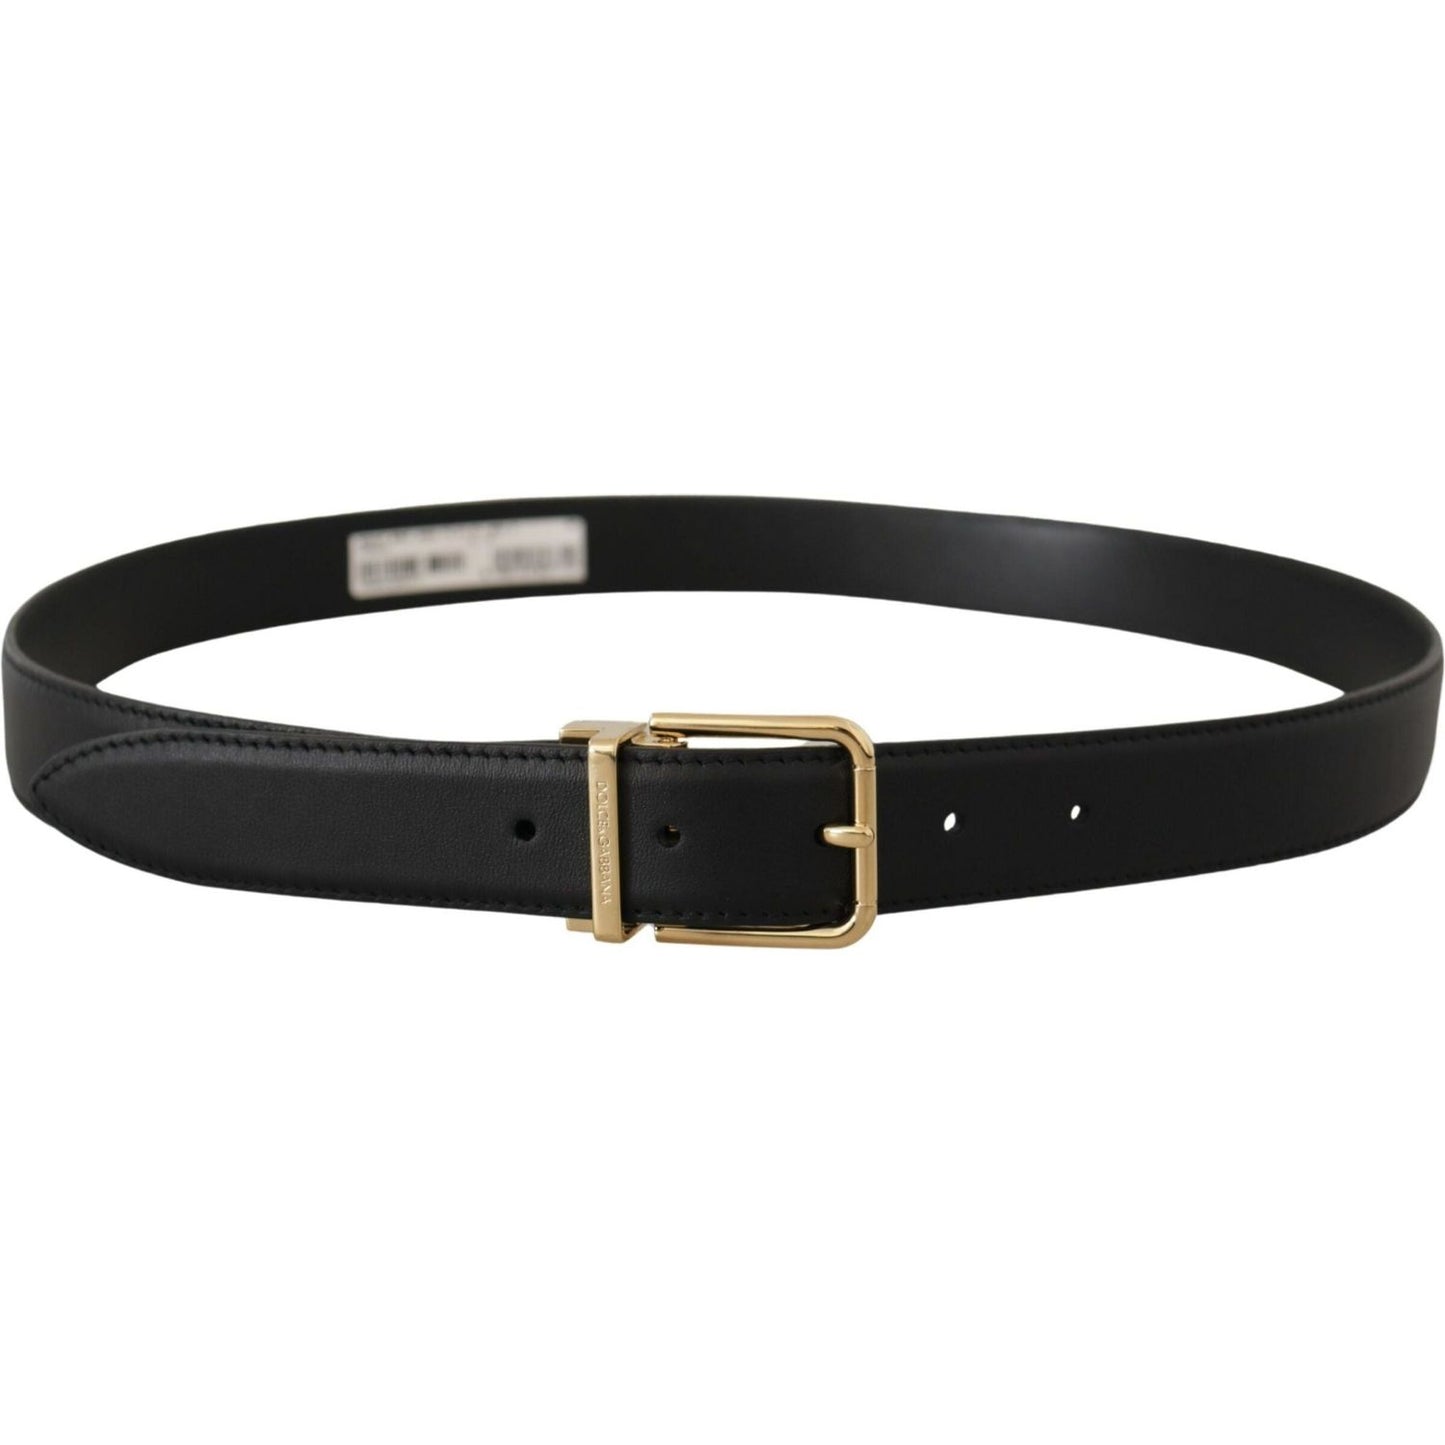 Dolce & Gabbana Elegant Black Leather Belt with Metal Buckle black-classic-leather-gold-metal-logo-buckle-belt